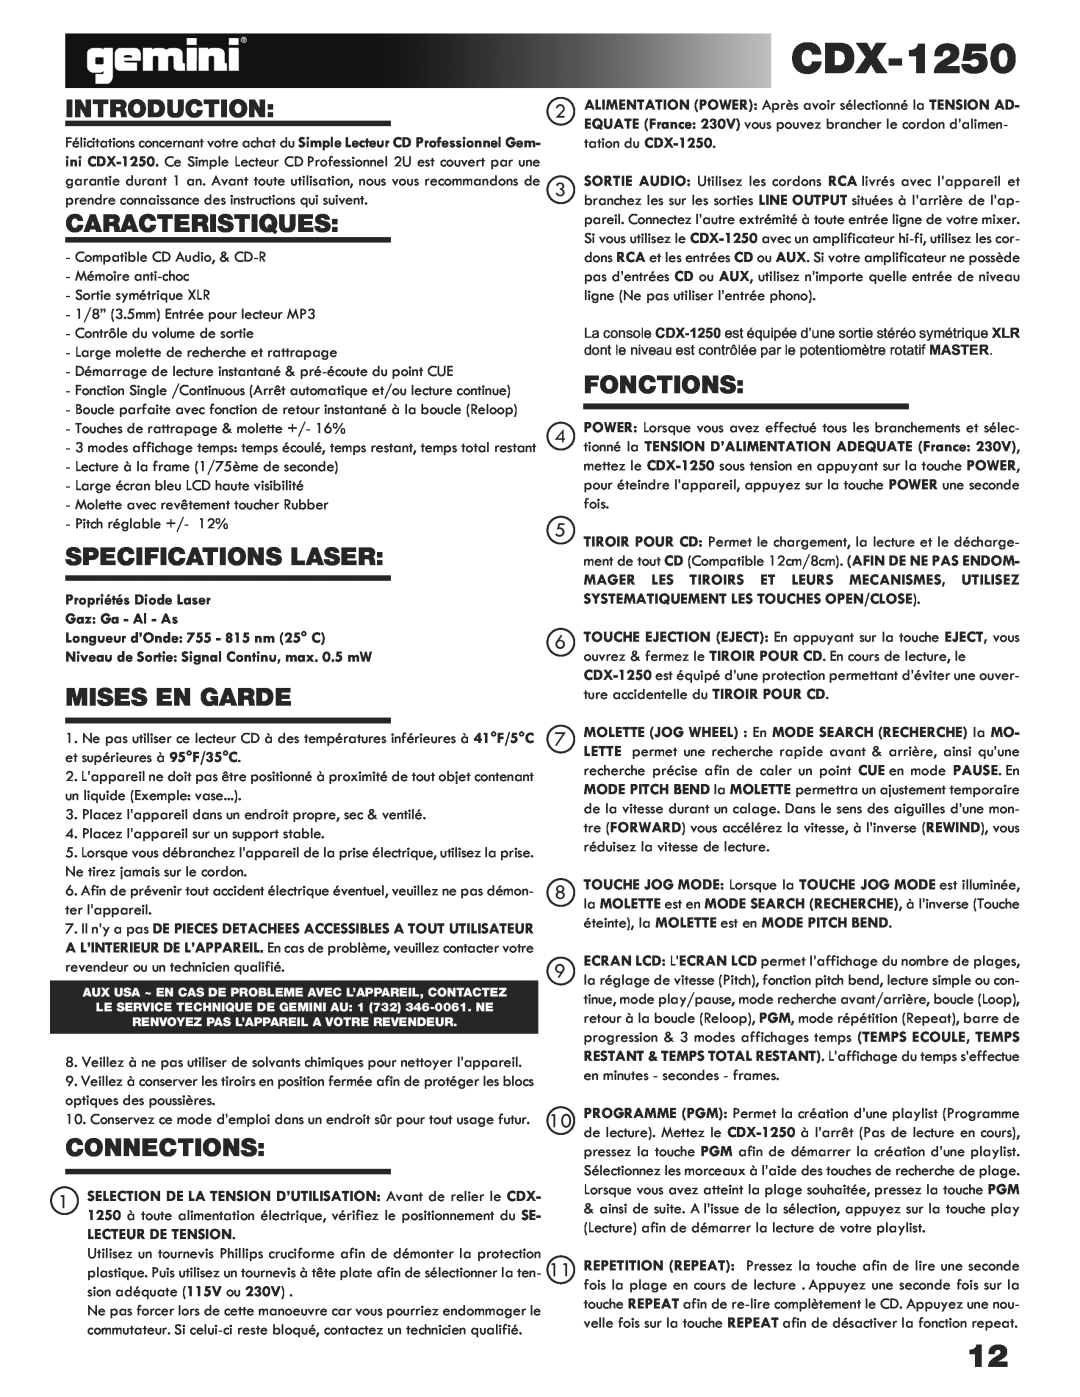 Gemini CDX-1250 manual Caracteristiques, Specifications Laser, Fonctions, Mises En Garde, Introduction, Connections 